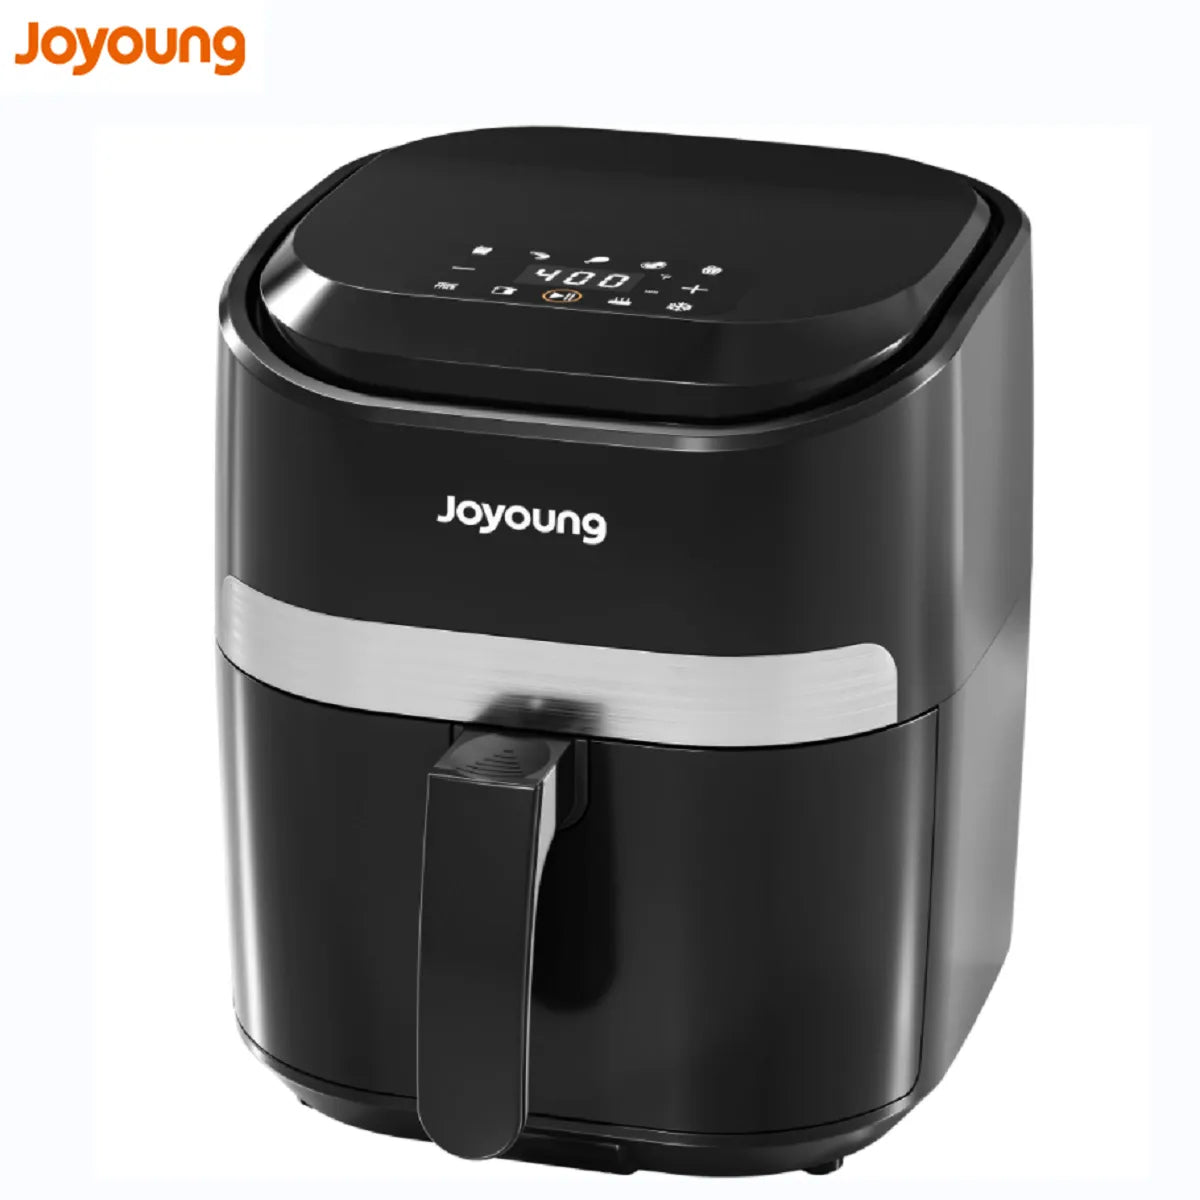 Joyoung 5.8 Quart Multi Tasker 8 Double Basket Air Fryer w/ LED Touchscreen  